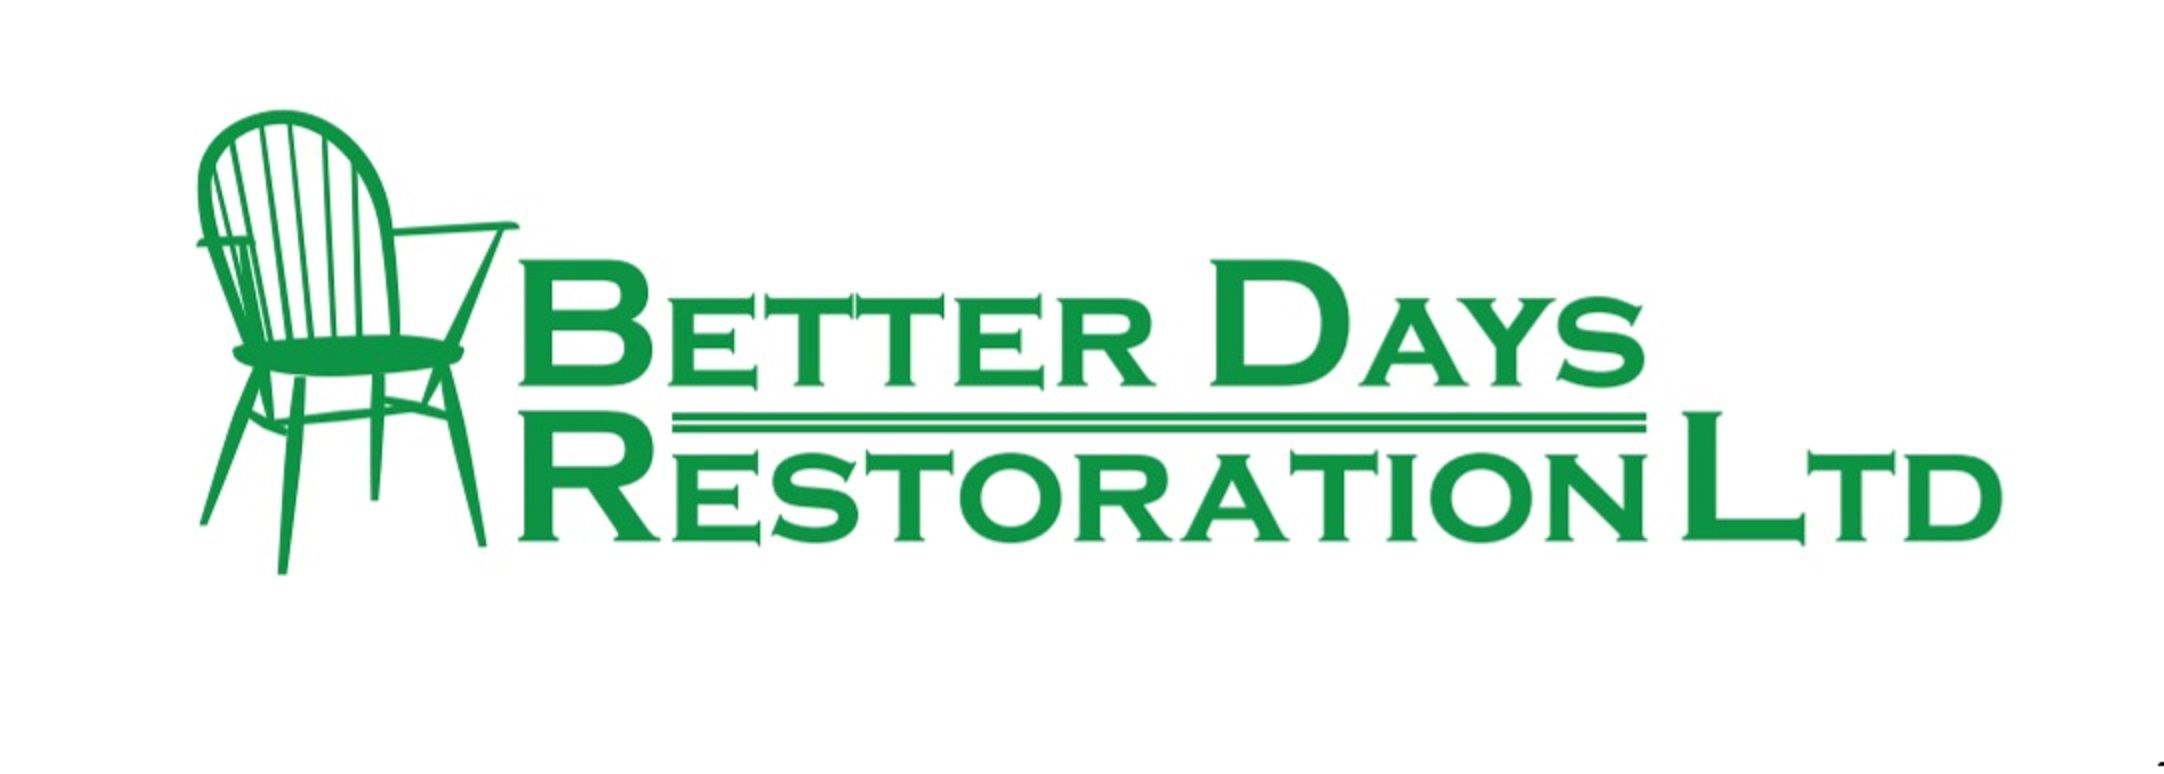 Better Days Restoration